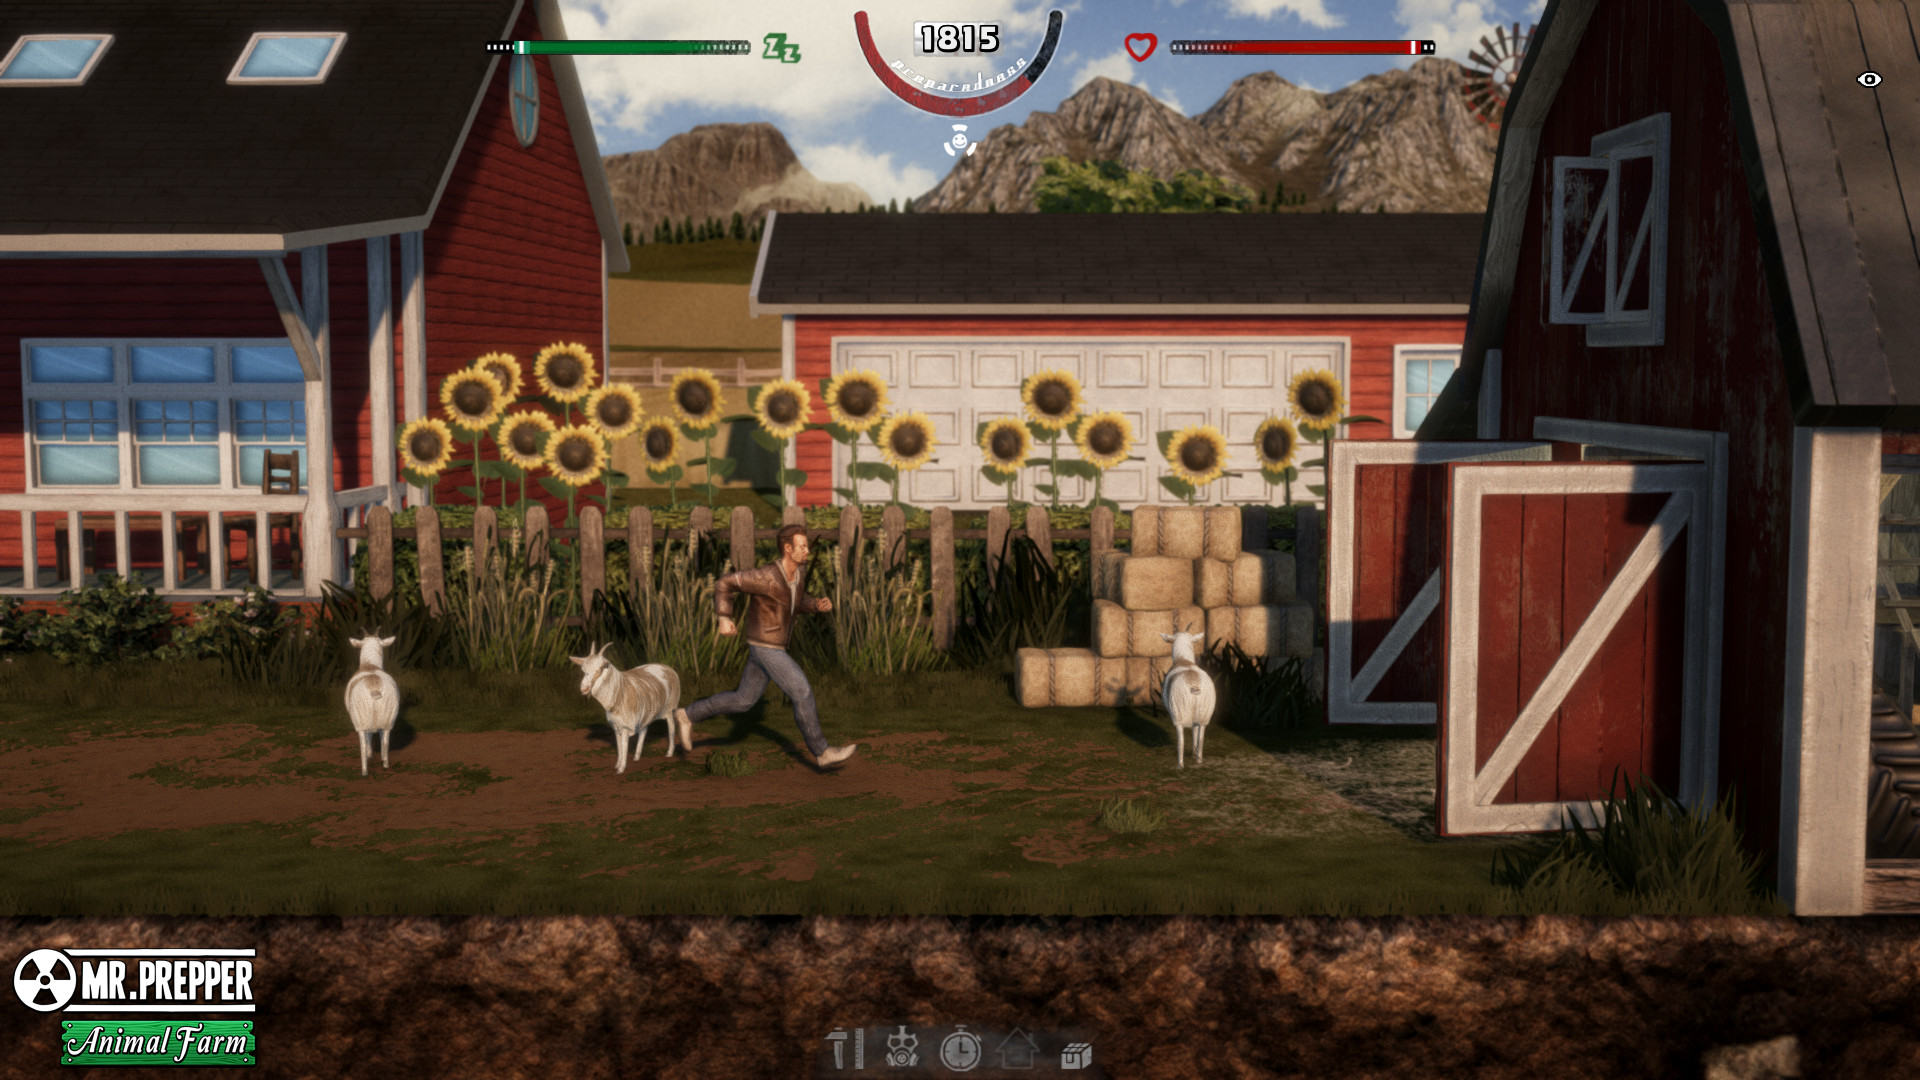 Mr. Prepper - Animal Farm DLC Free Download for PC